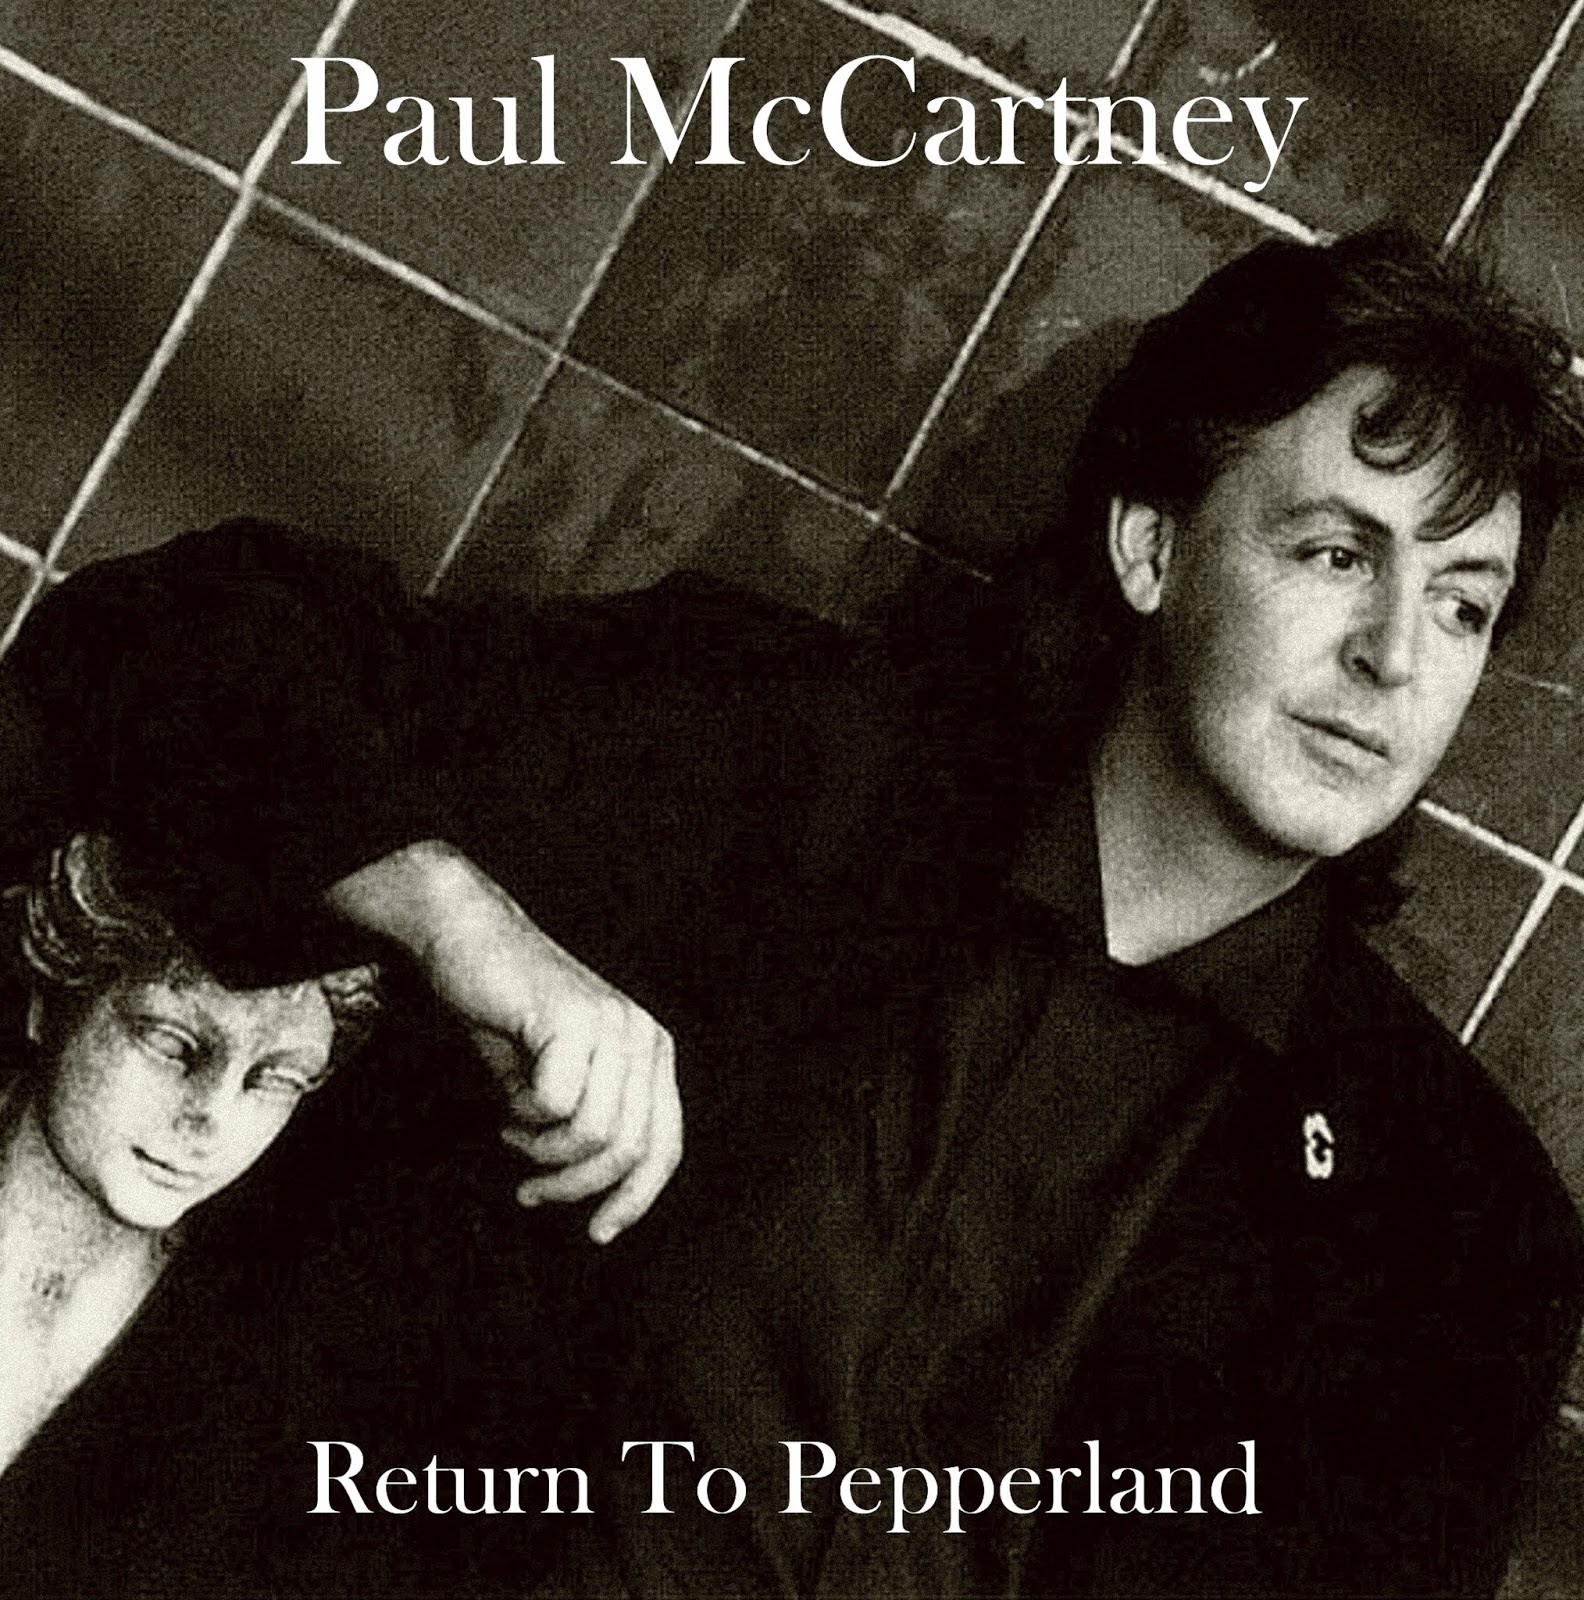 Paul McCartney: "Return To Pepperland" - (Unreleased 1987/88 doub...